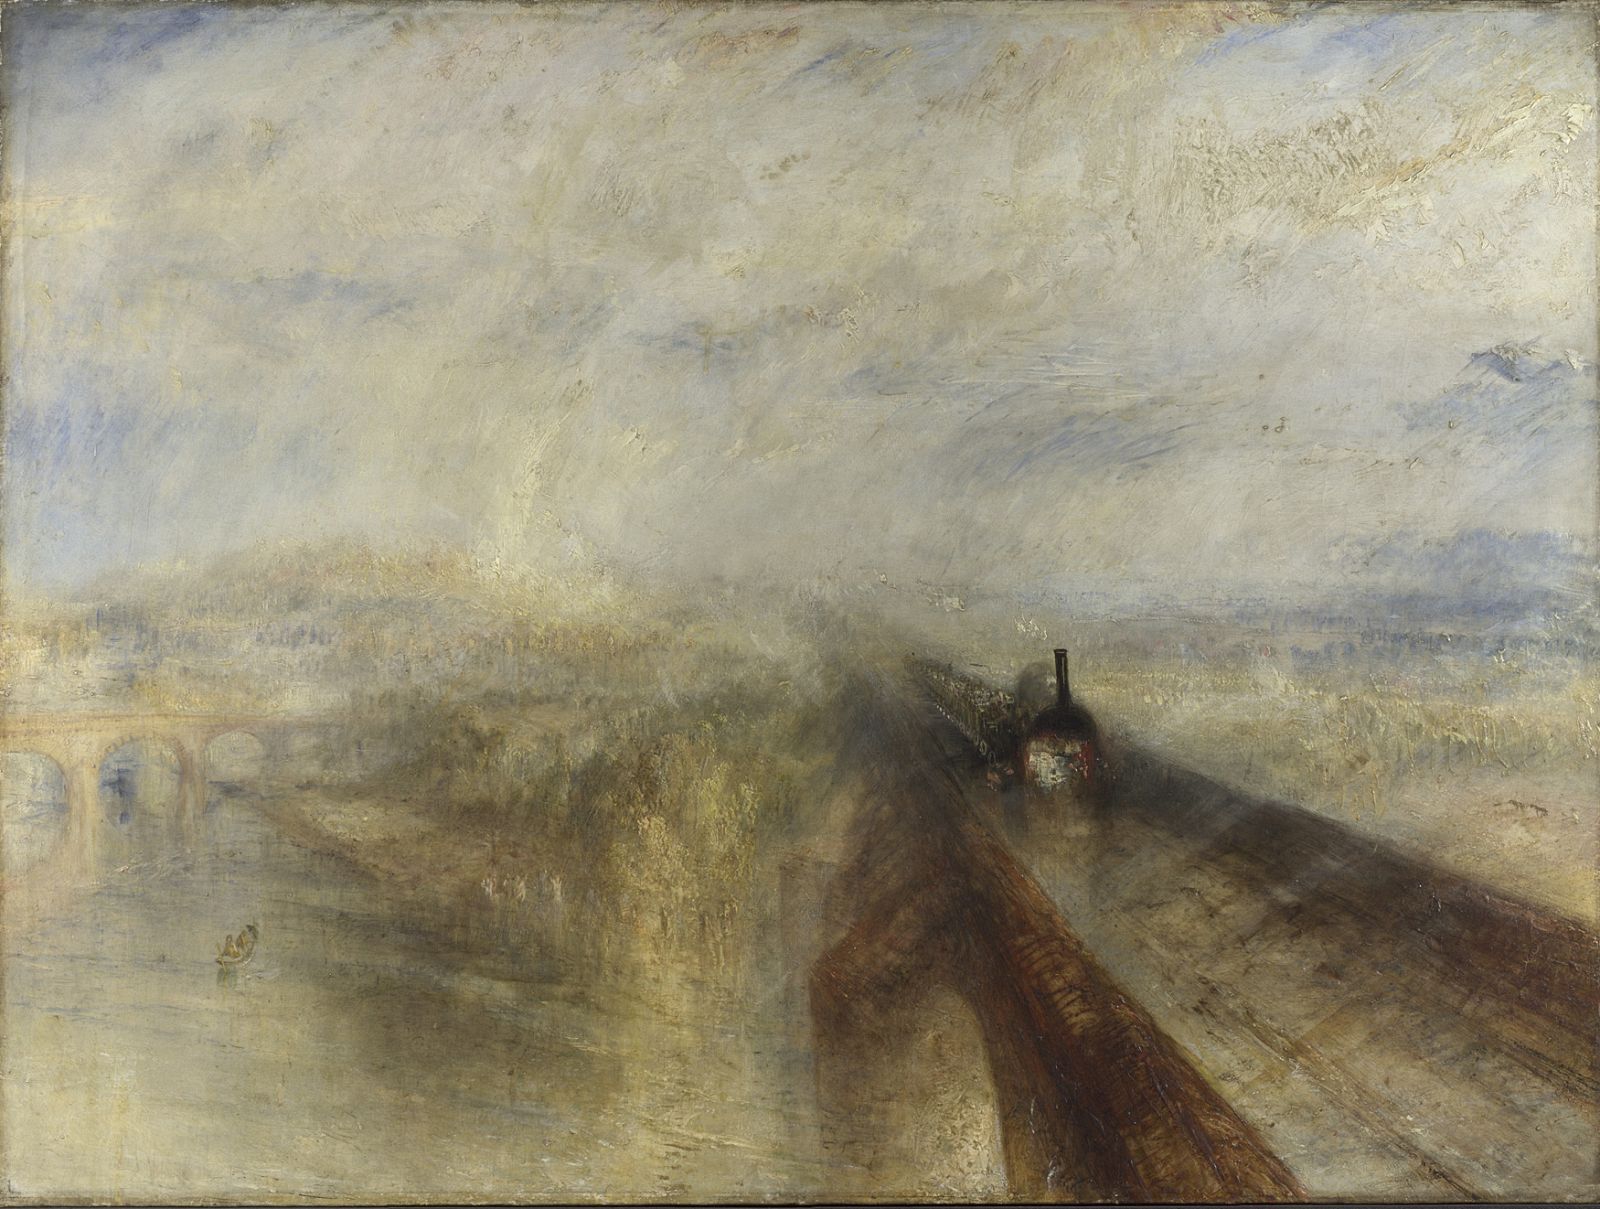 Turner, "Lluvia. vapor y velocidad" (1844)